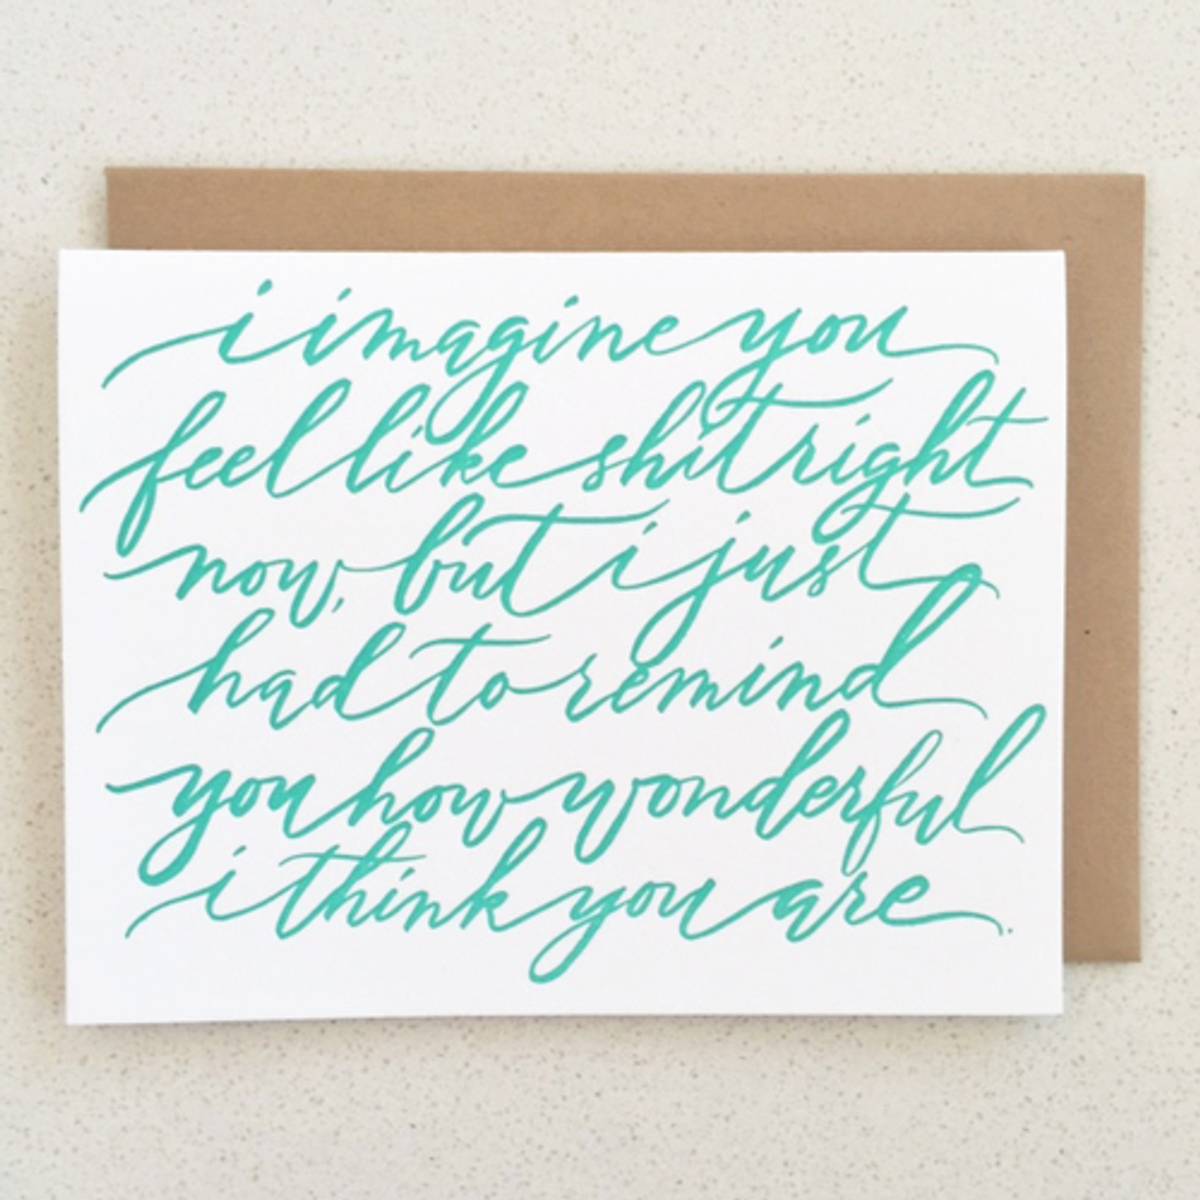 ‘You Are Wonderful’ greeting card; Jessica Zucker